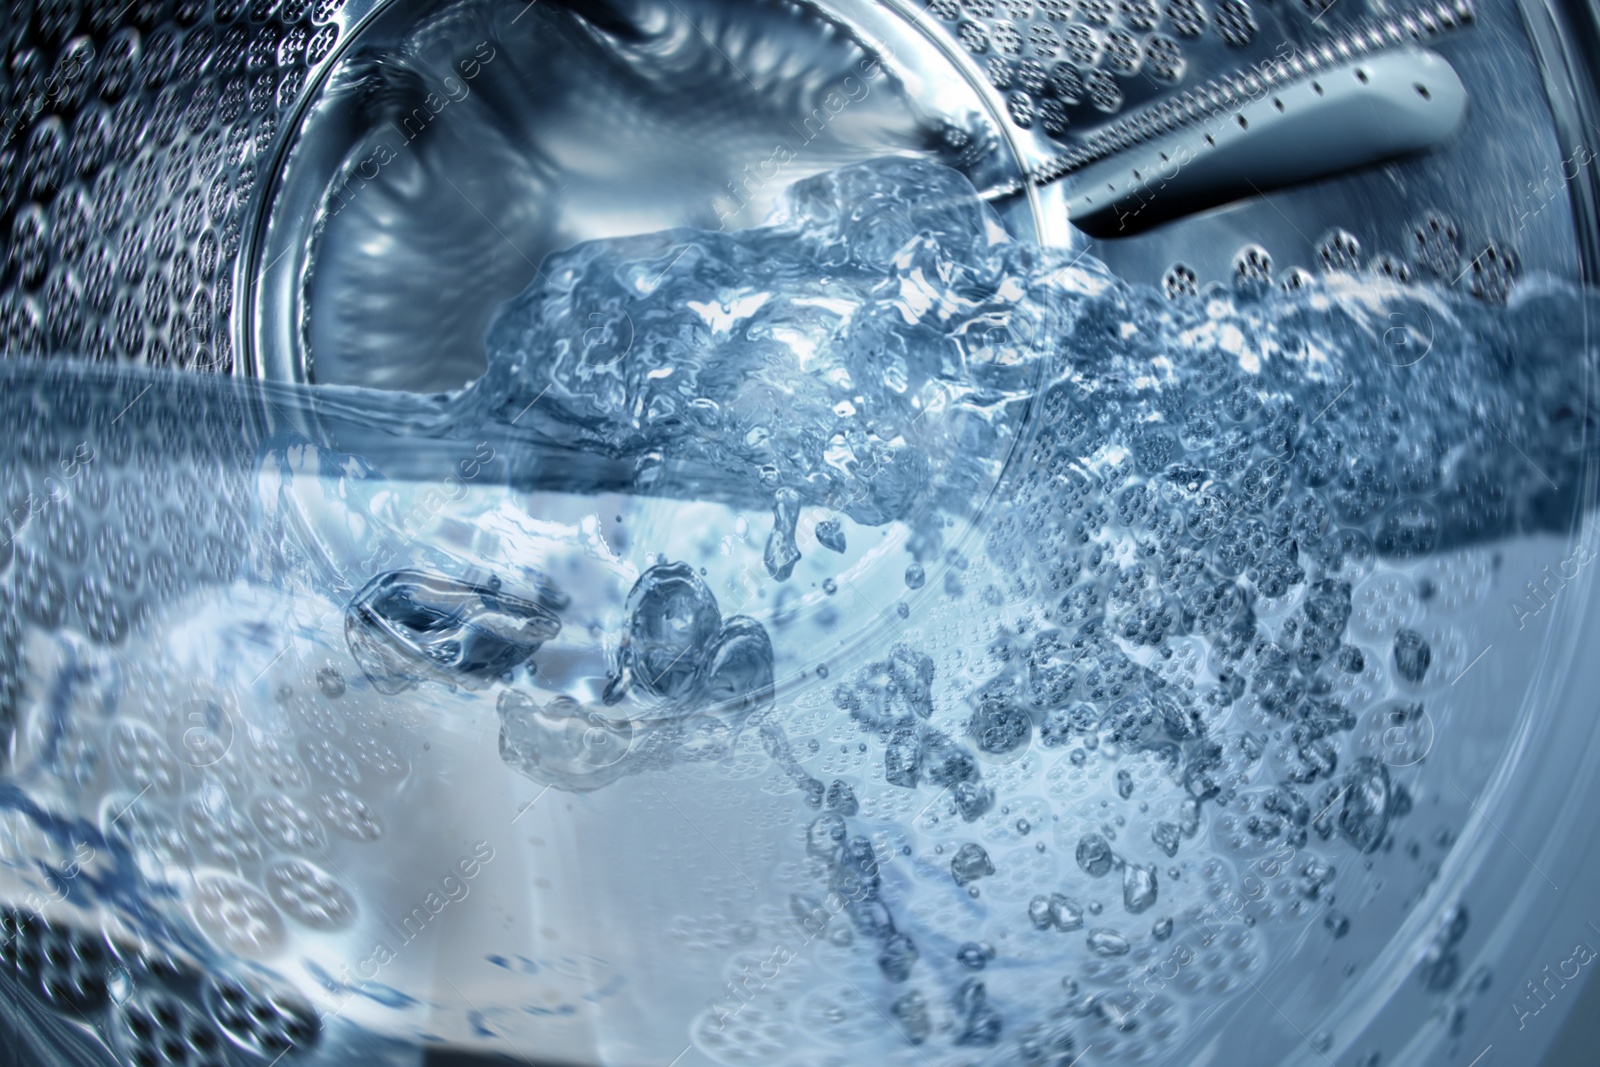 Image of Washing machine drum with water, closeup view